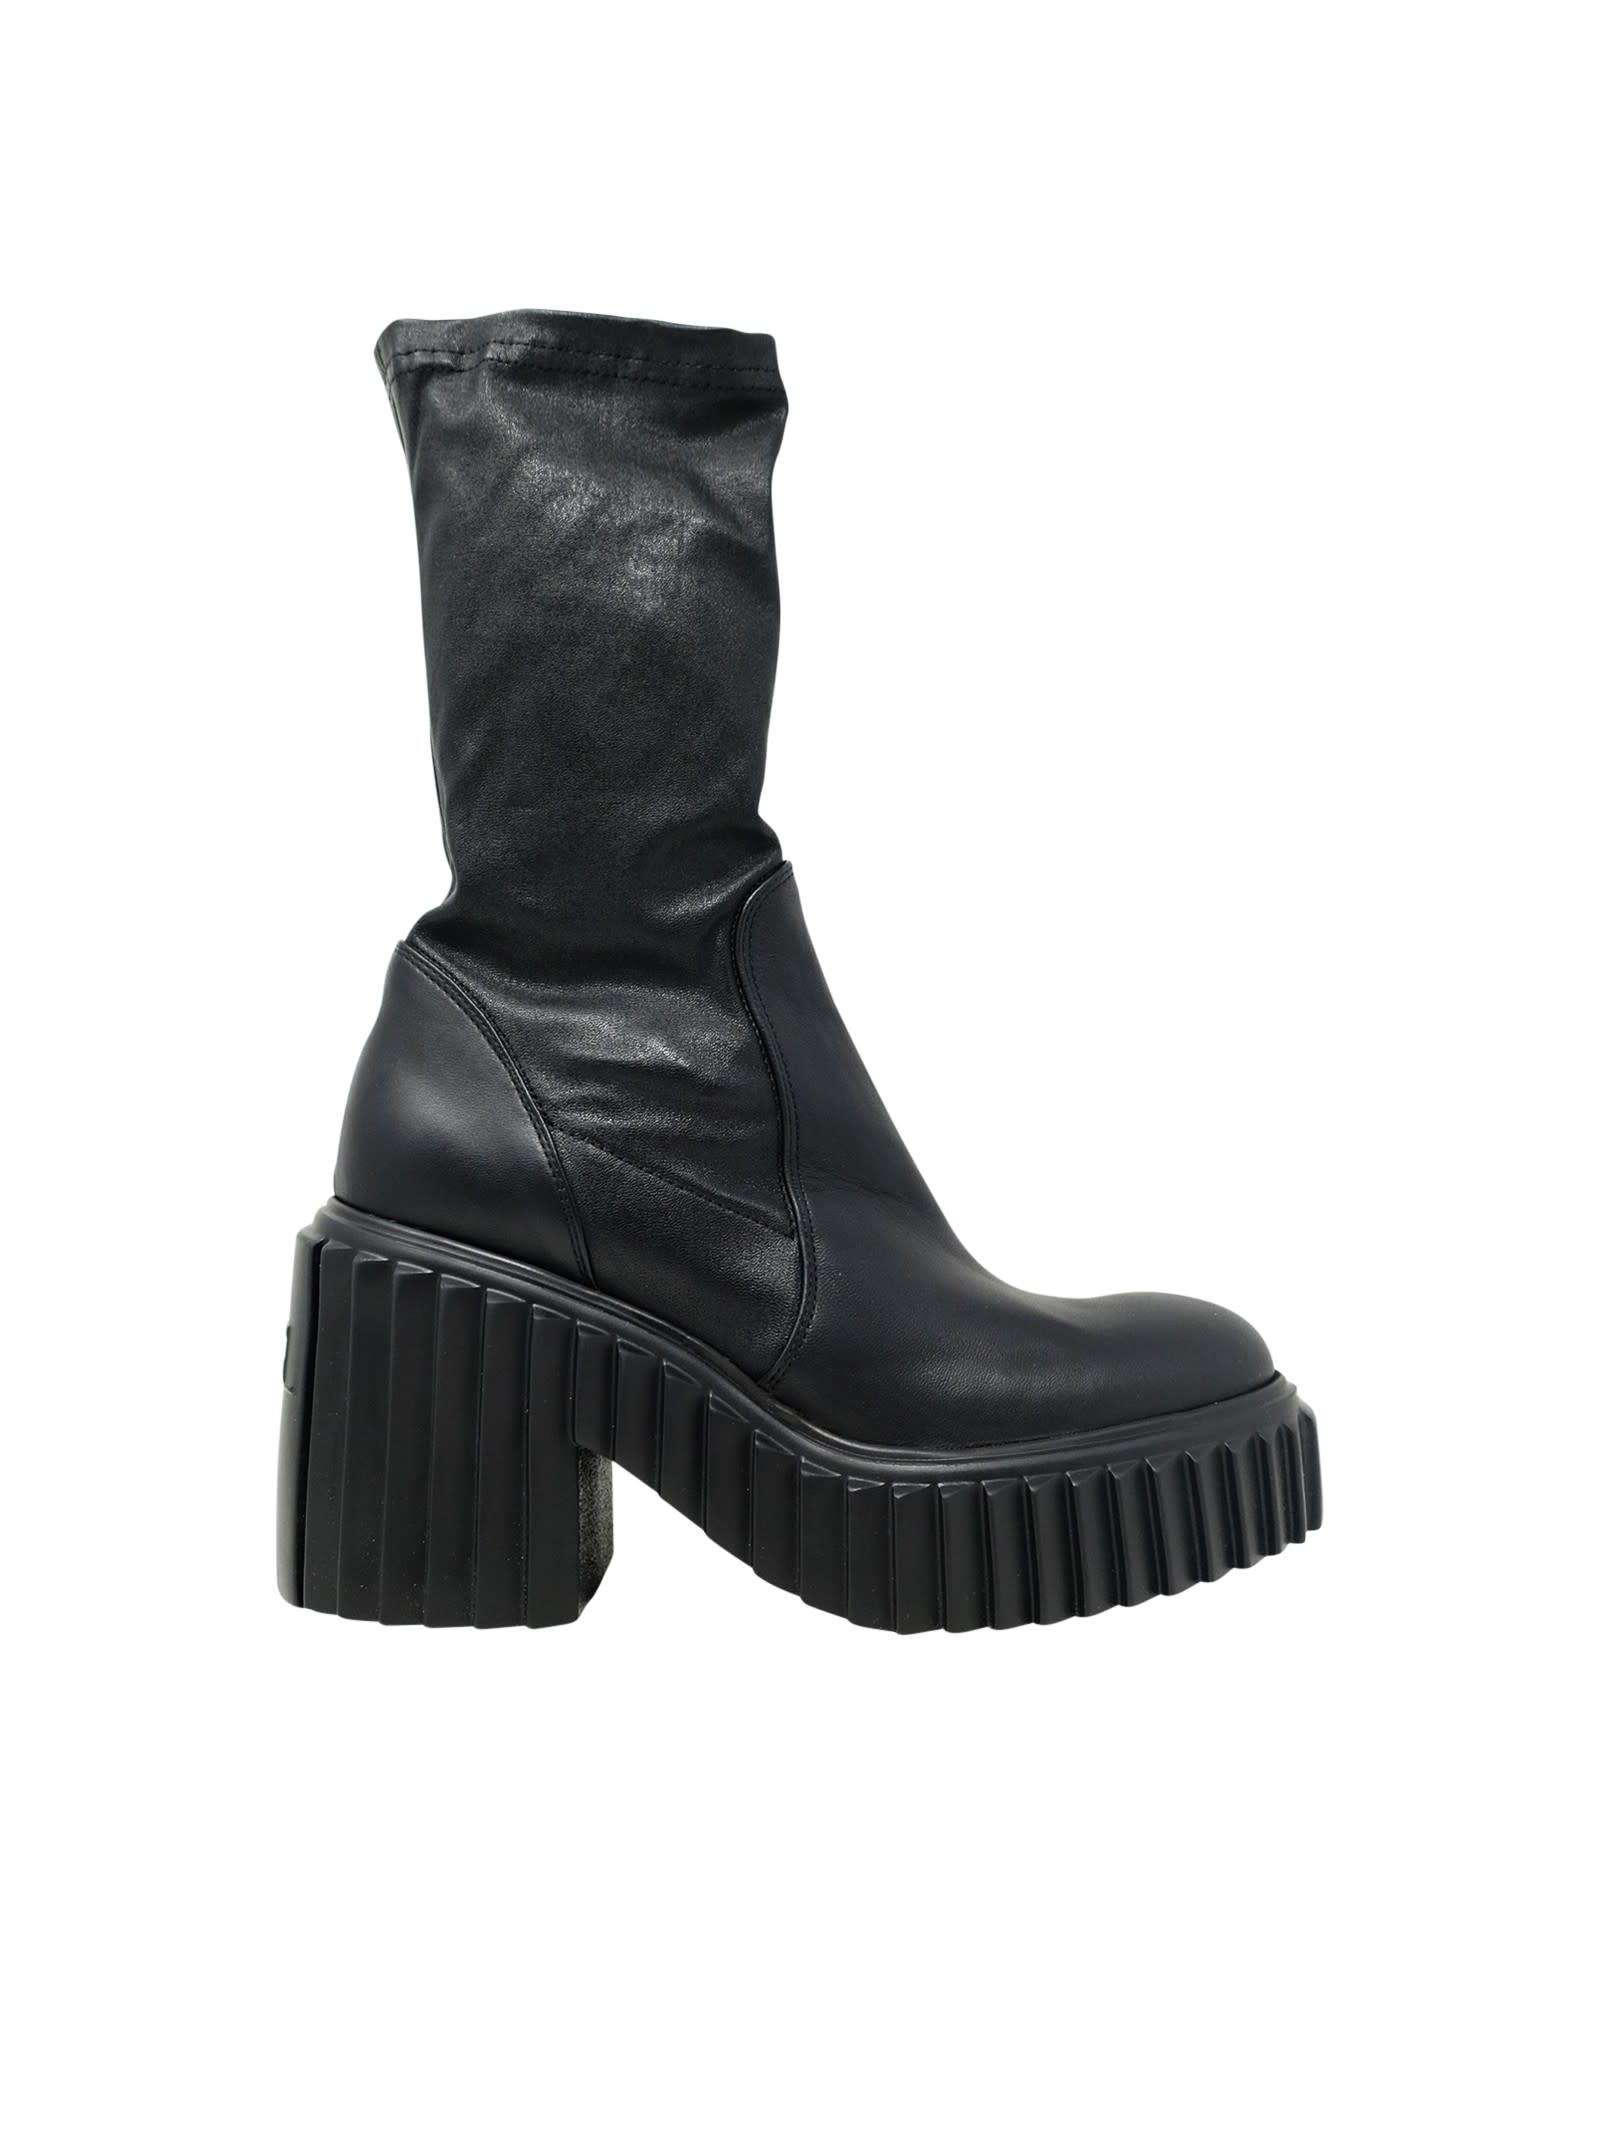 Agl Black Leather Elastic Boots